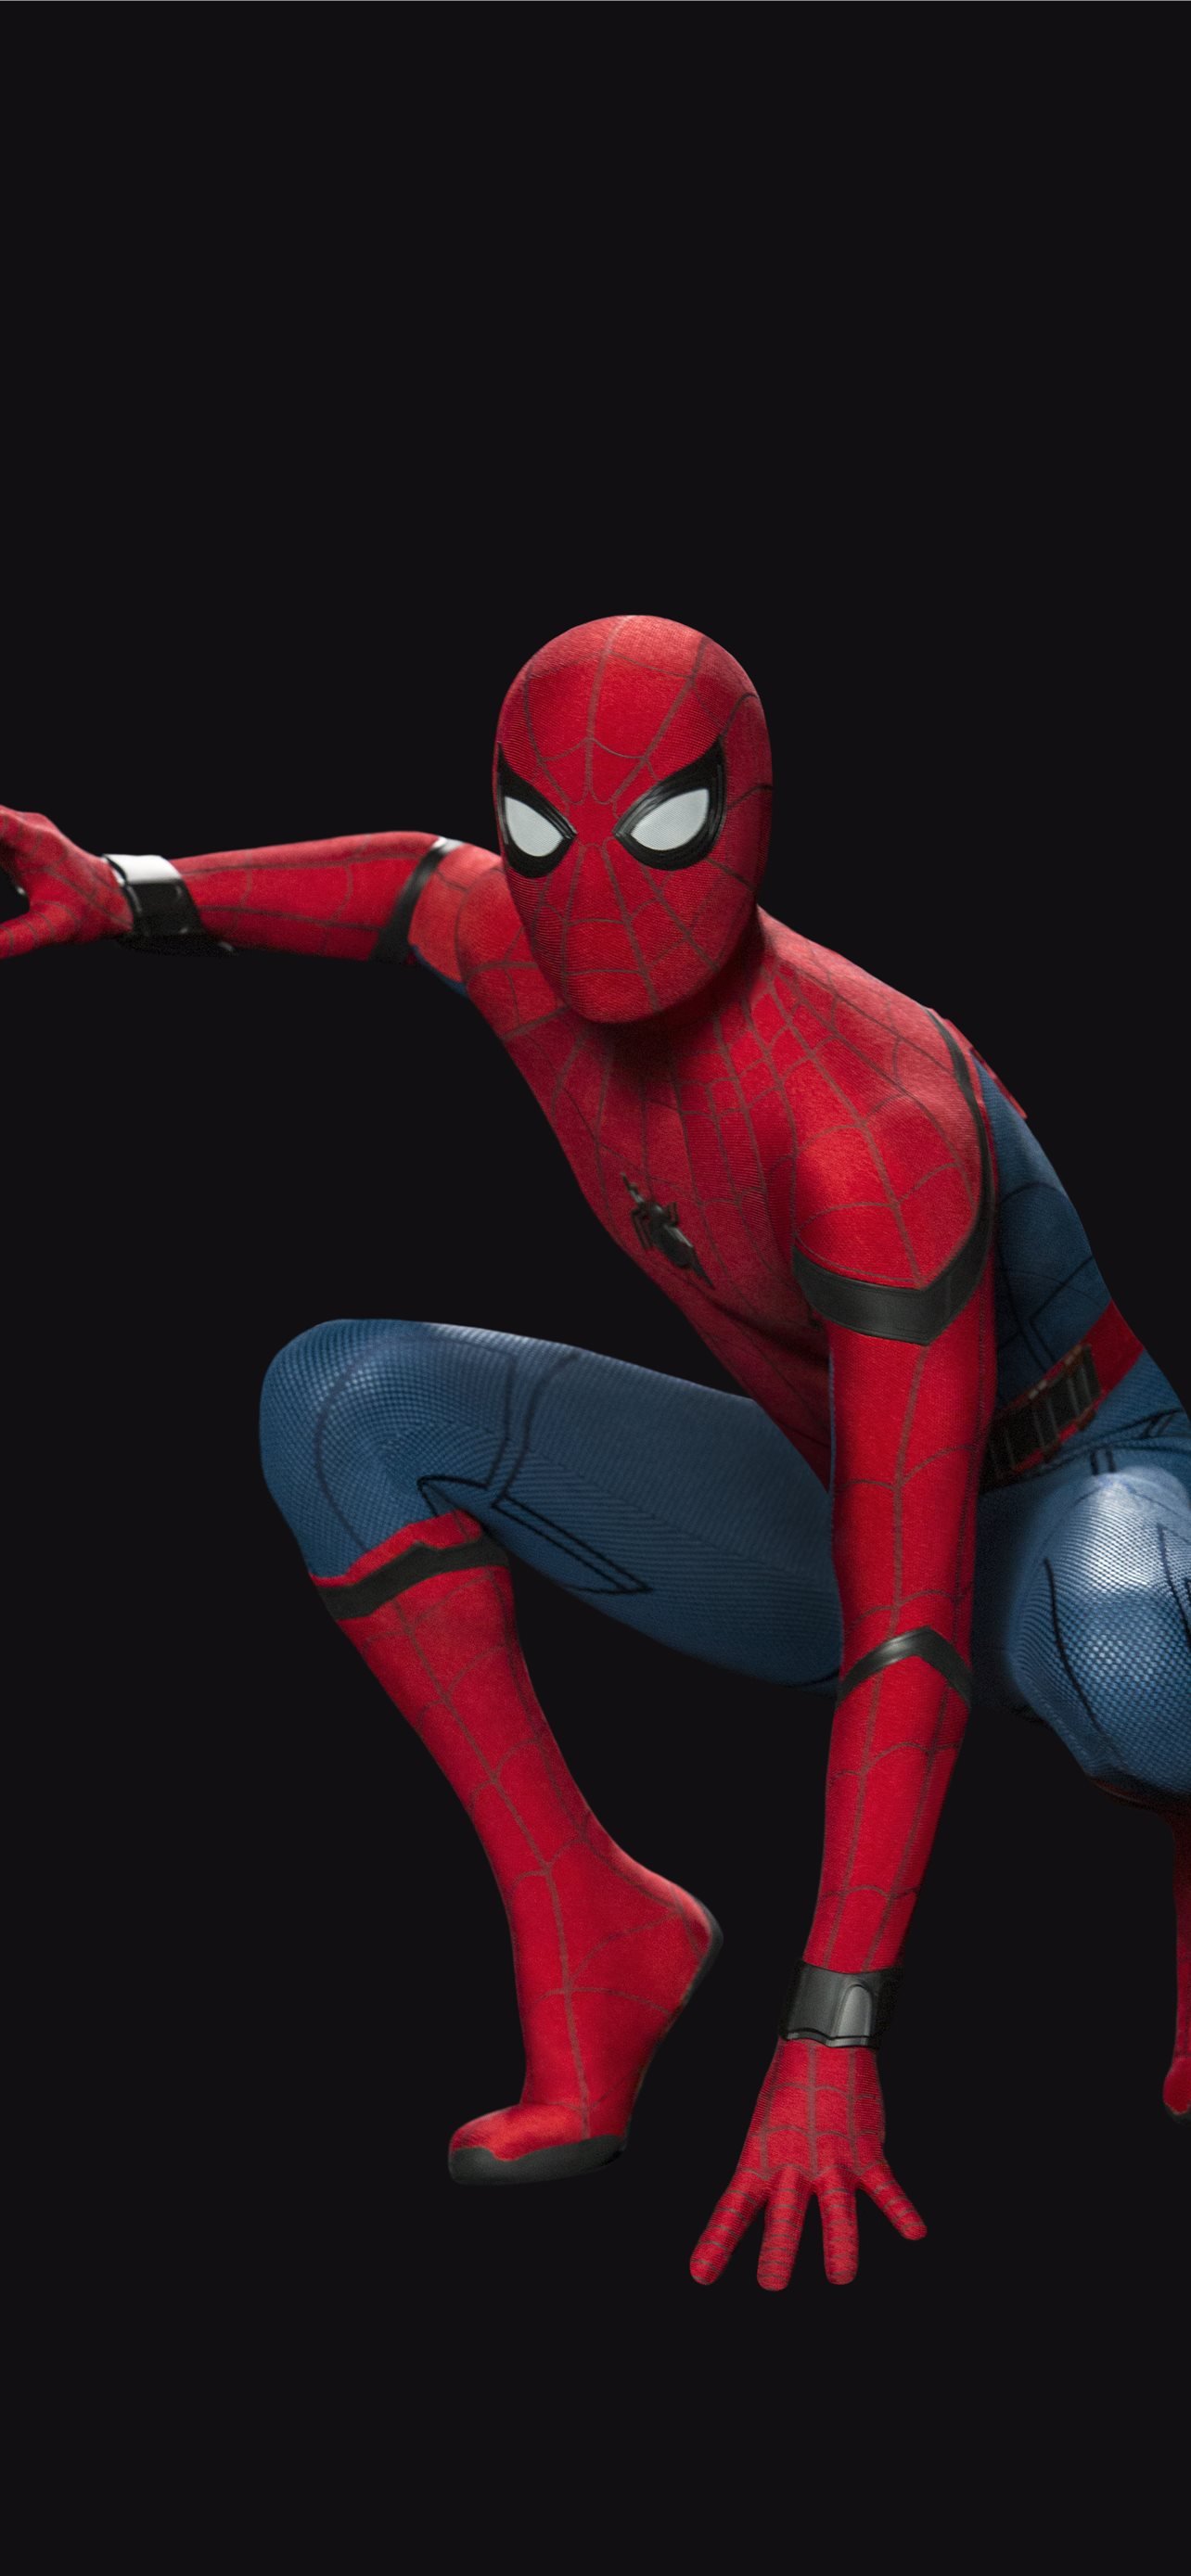 Spiderman Posing Resolution HD 4k Image Backgroun. iPhone Wallpaper Free Download